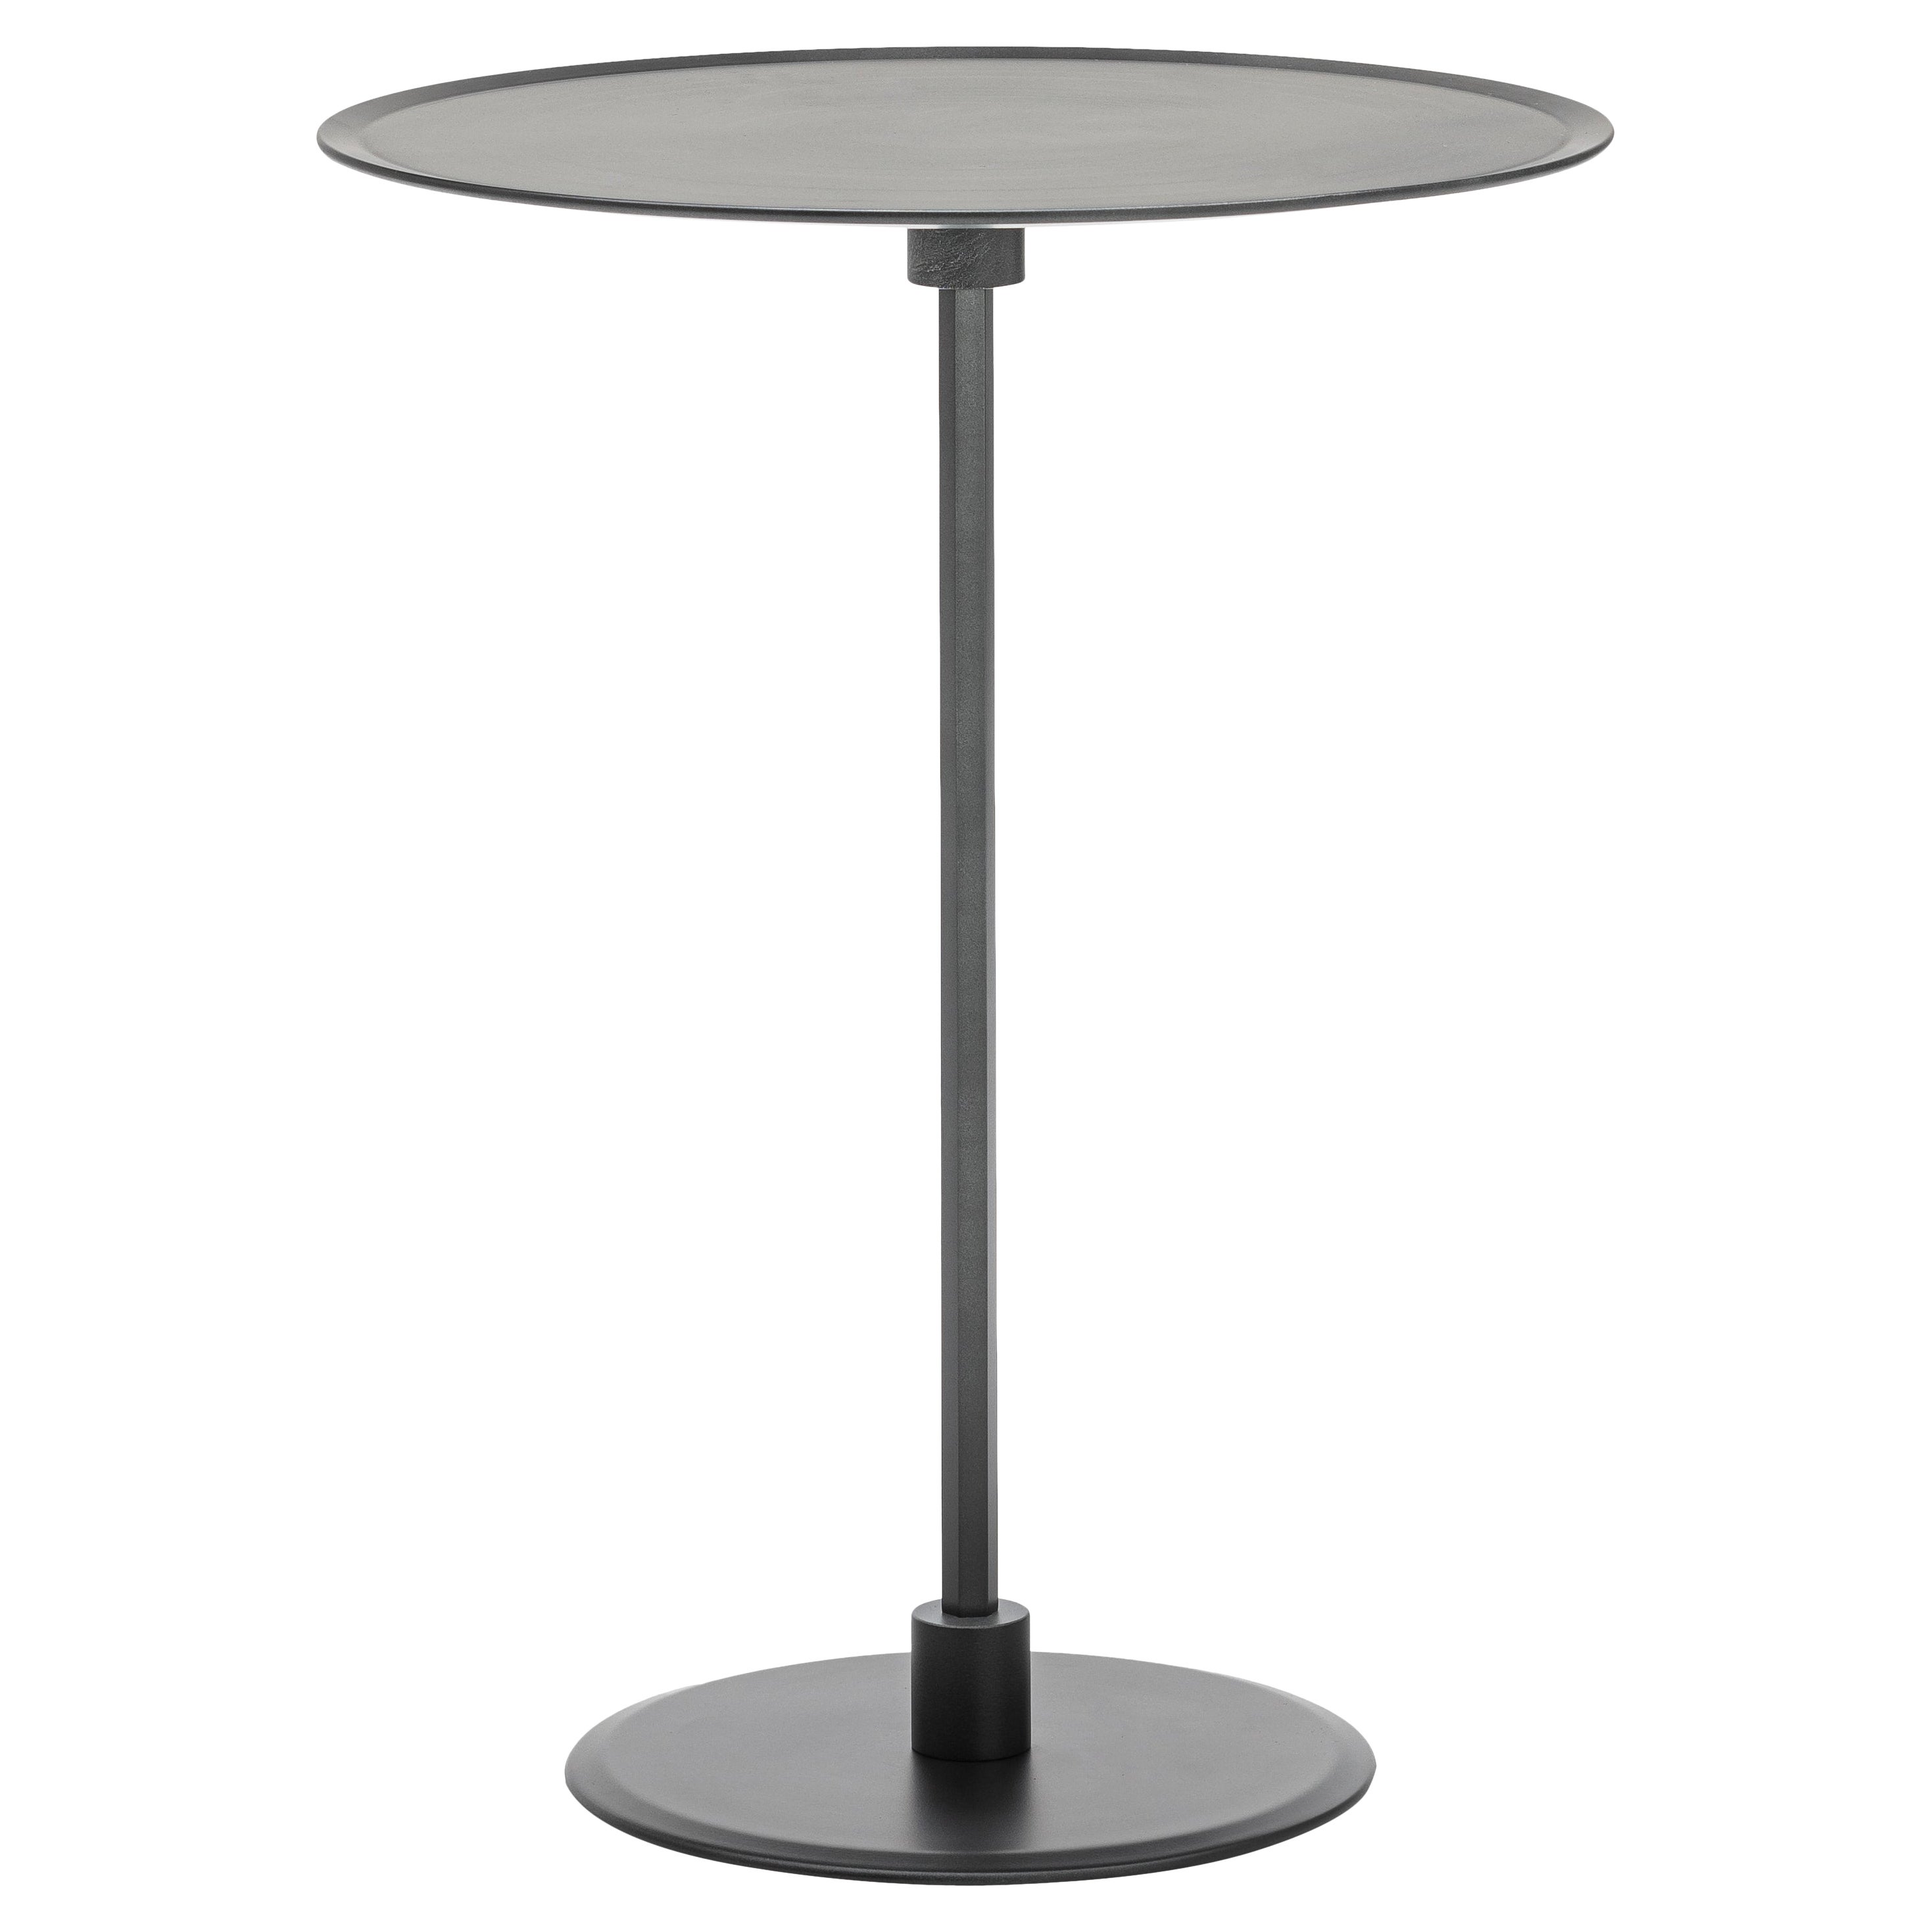 Acerbis Medium Gong Side Table in Matt Painted Gunmetal Top with Frame